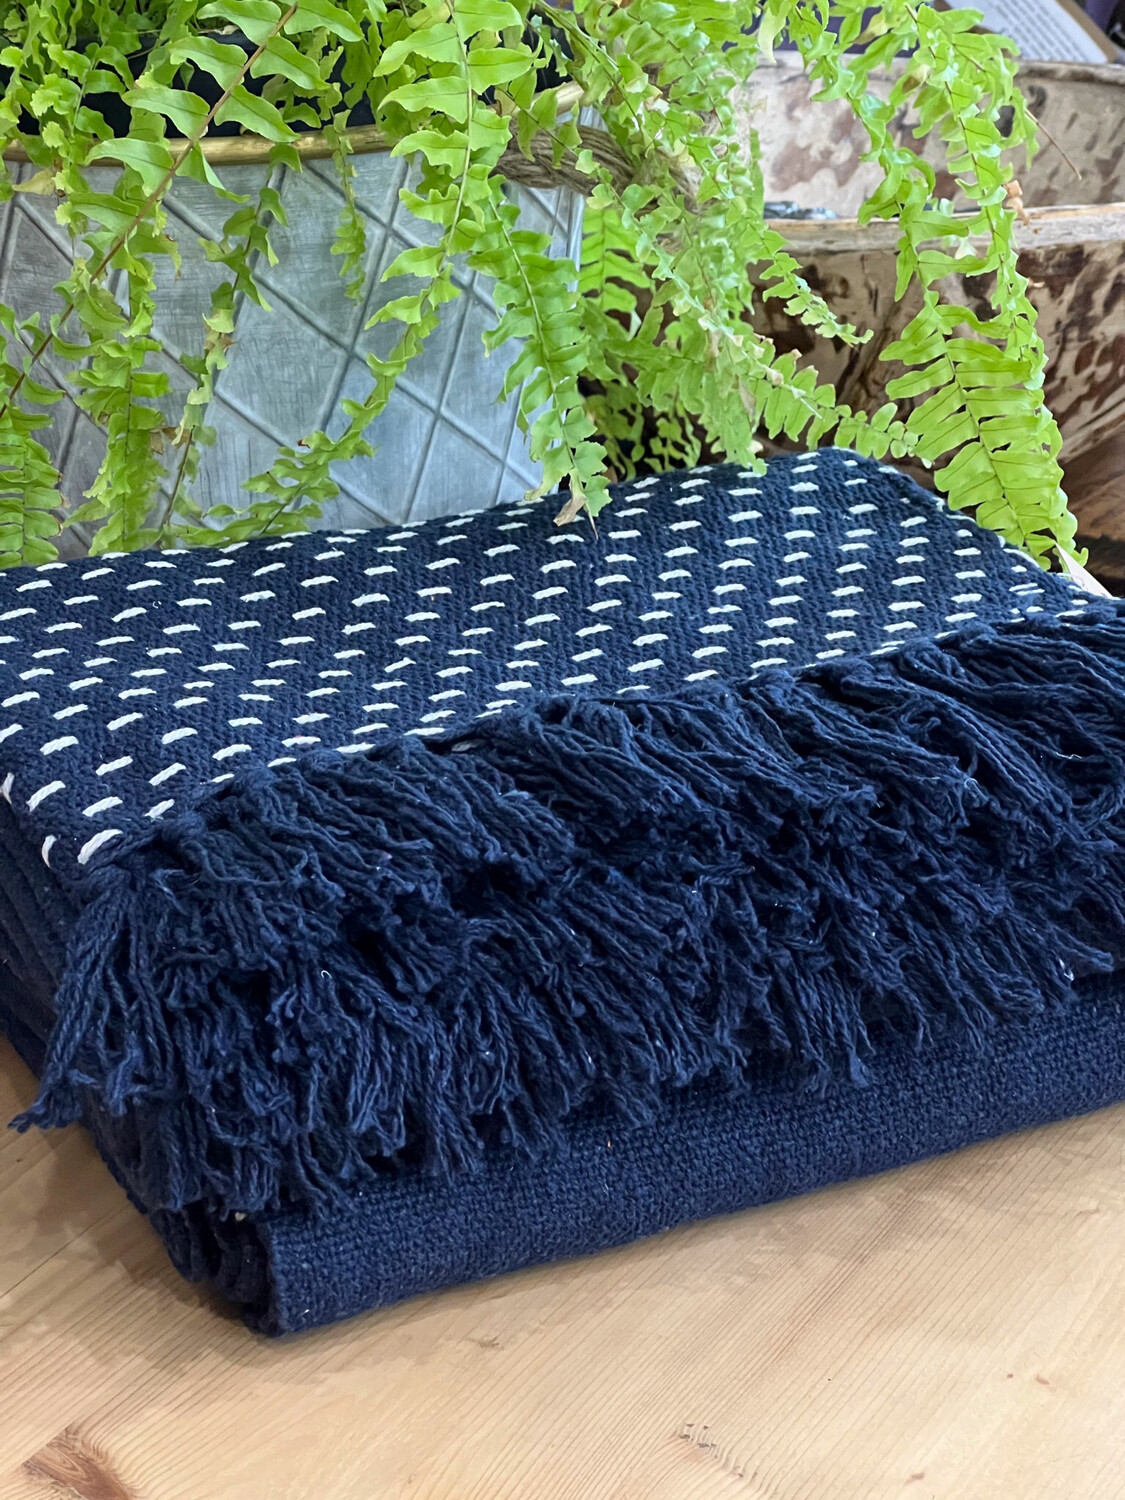 Stitched Blue Blanket / Throw